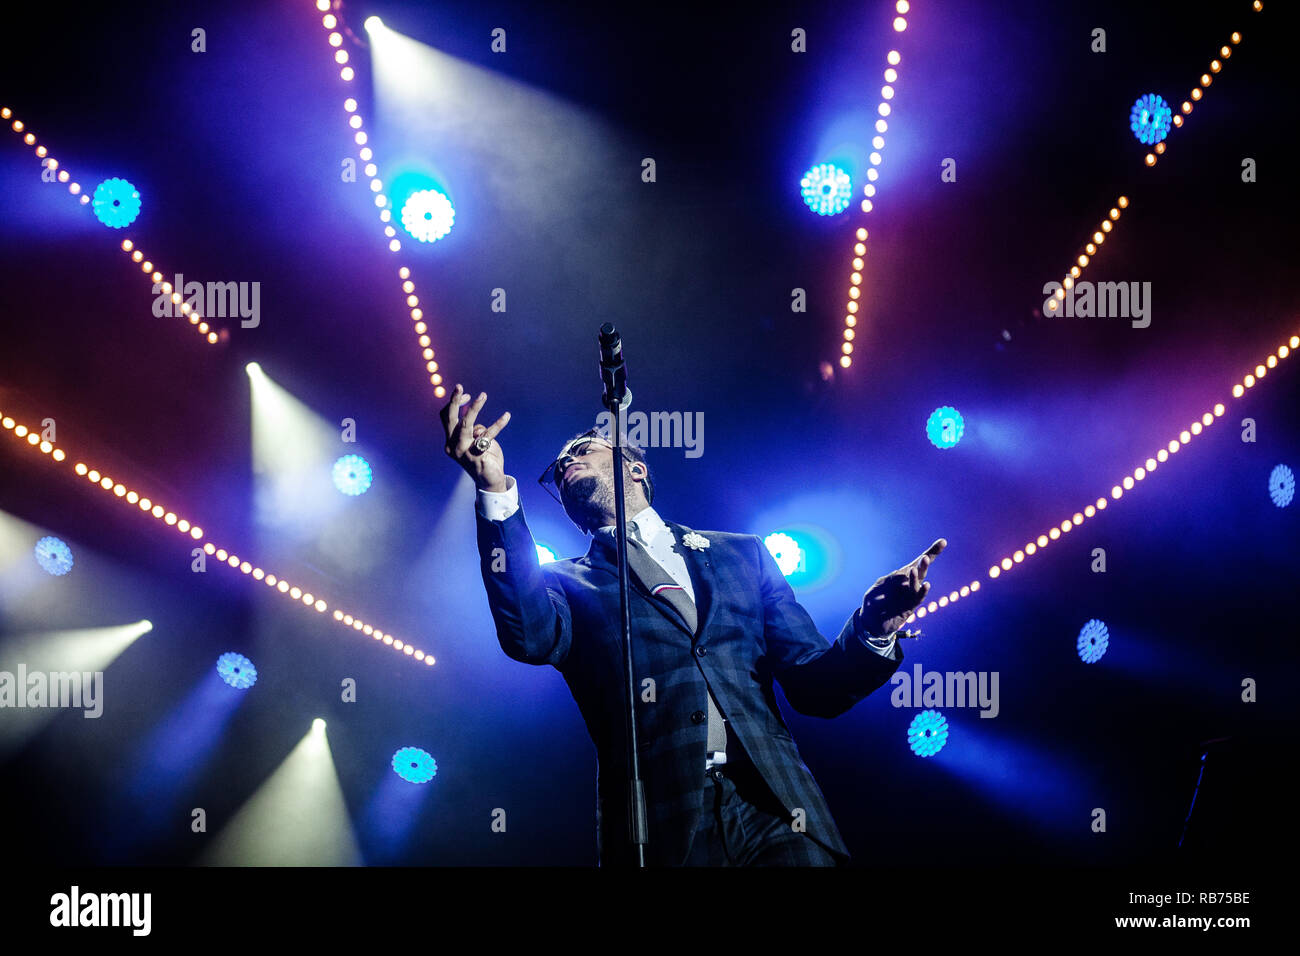 The Swedish singer, musicians and songwriter Kim Cesarion performs a live concert at the Danish music festival Skanderborg Festival 2014 / Smukfest. Denmark, 07/08 2014. EXCLUDING DENMARK. Stock Photo